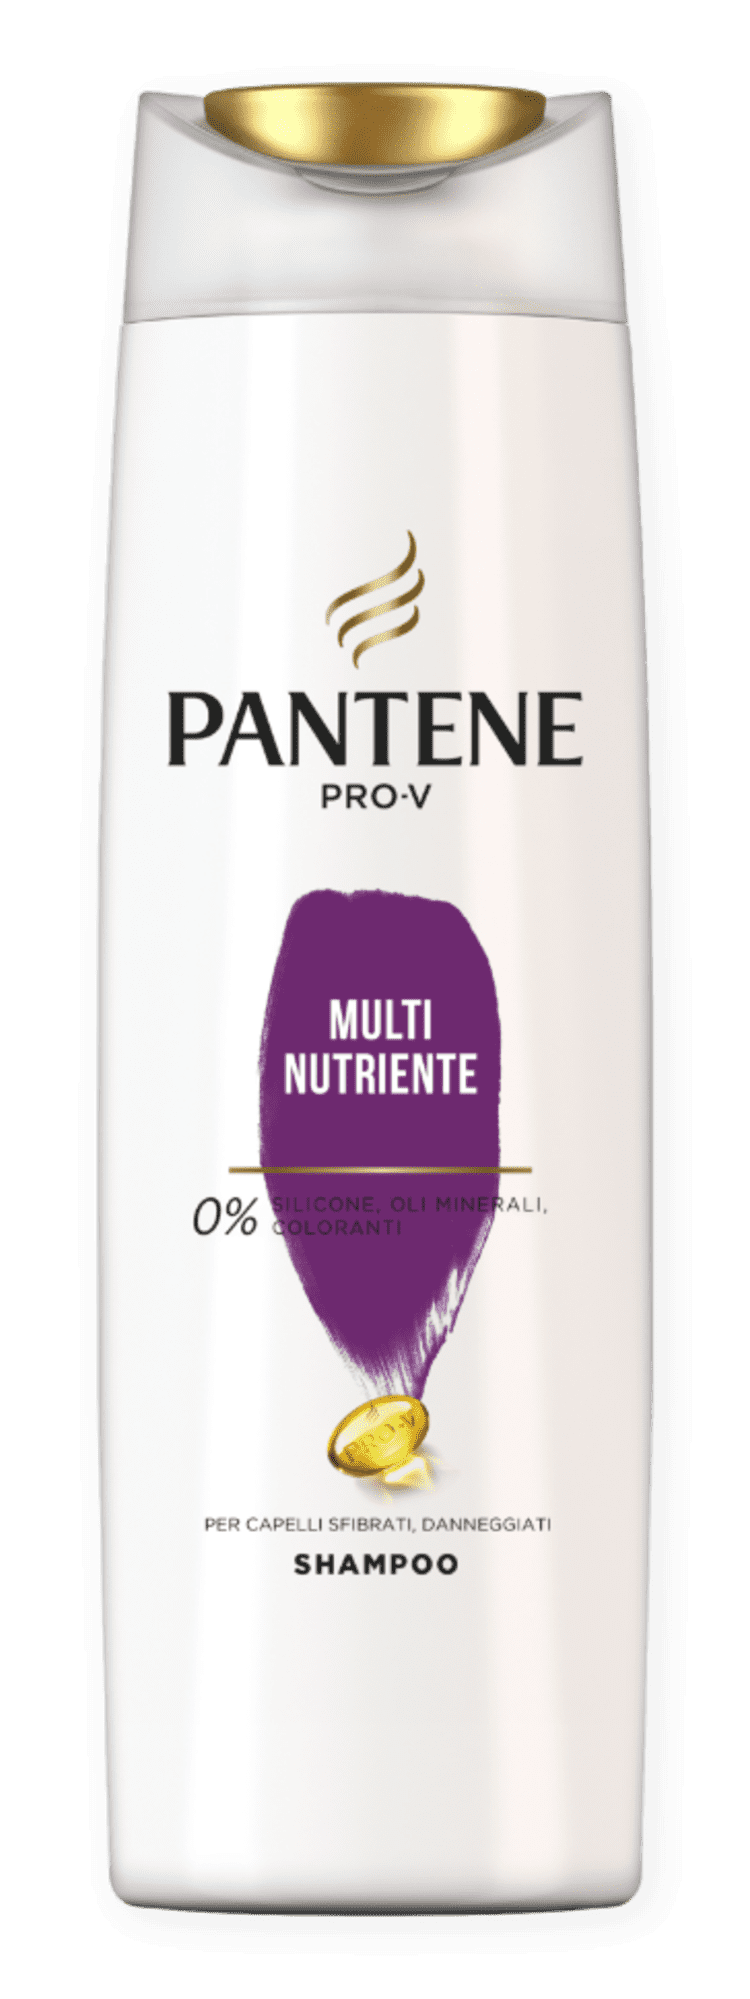 Pantene Pro-V multi nutriente (4603739865155)